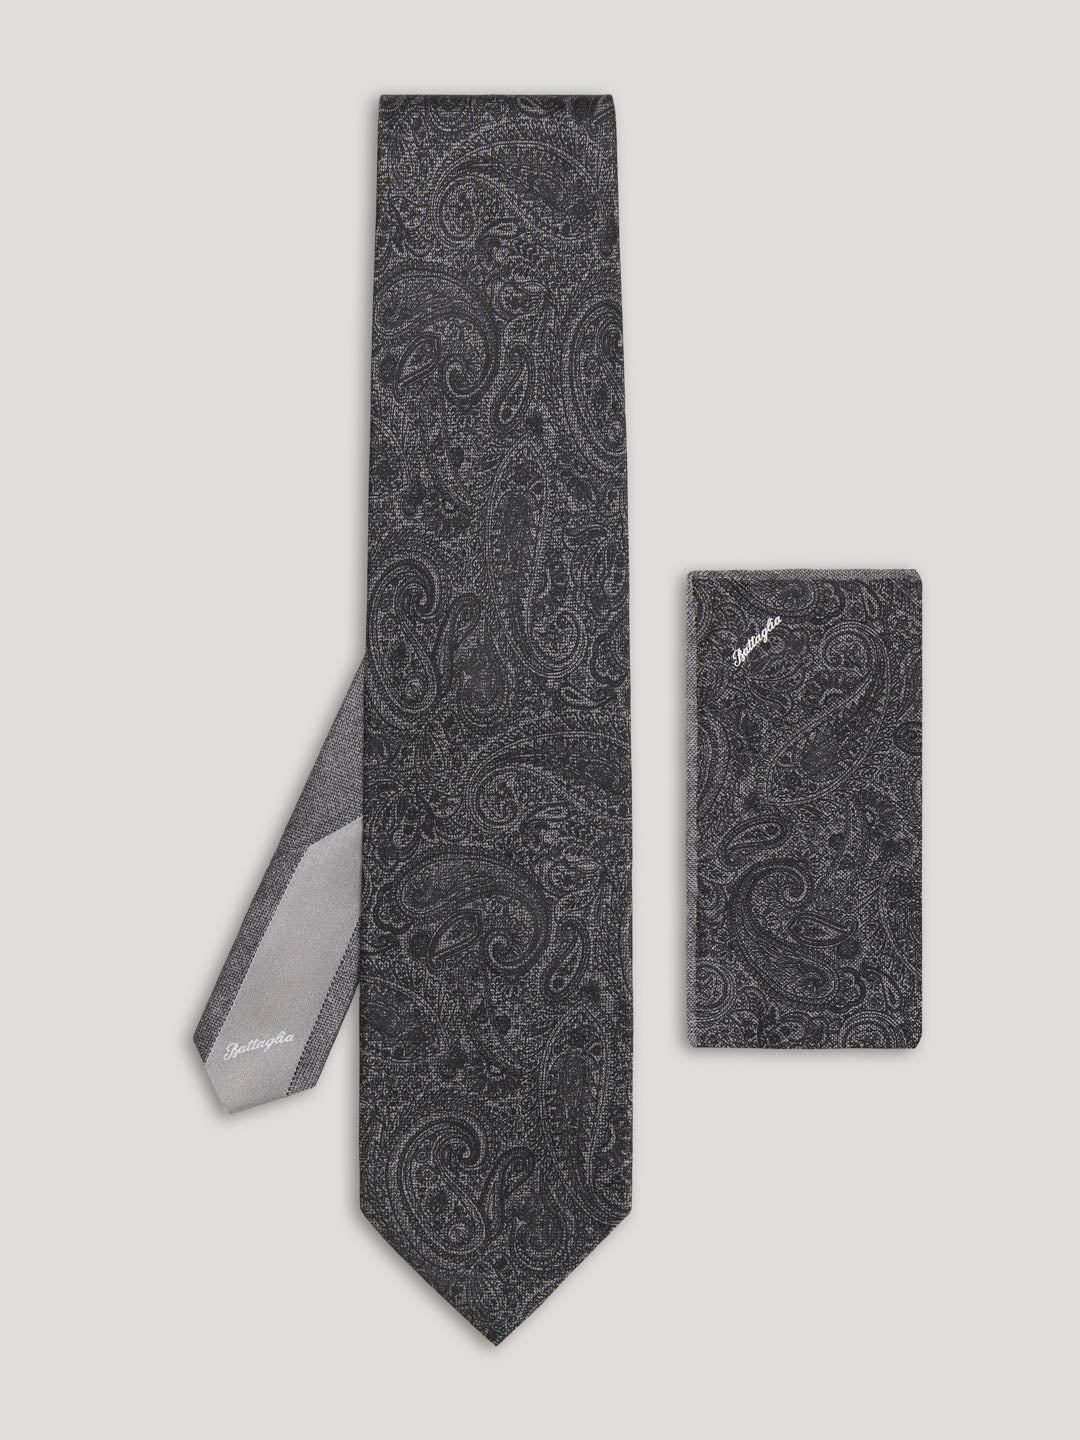 Black paisley tie with matching handkerchief. 